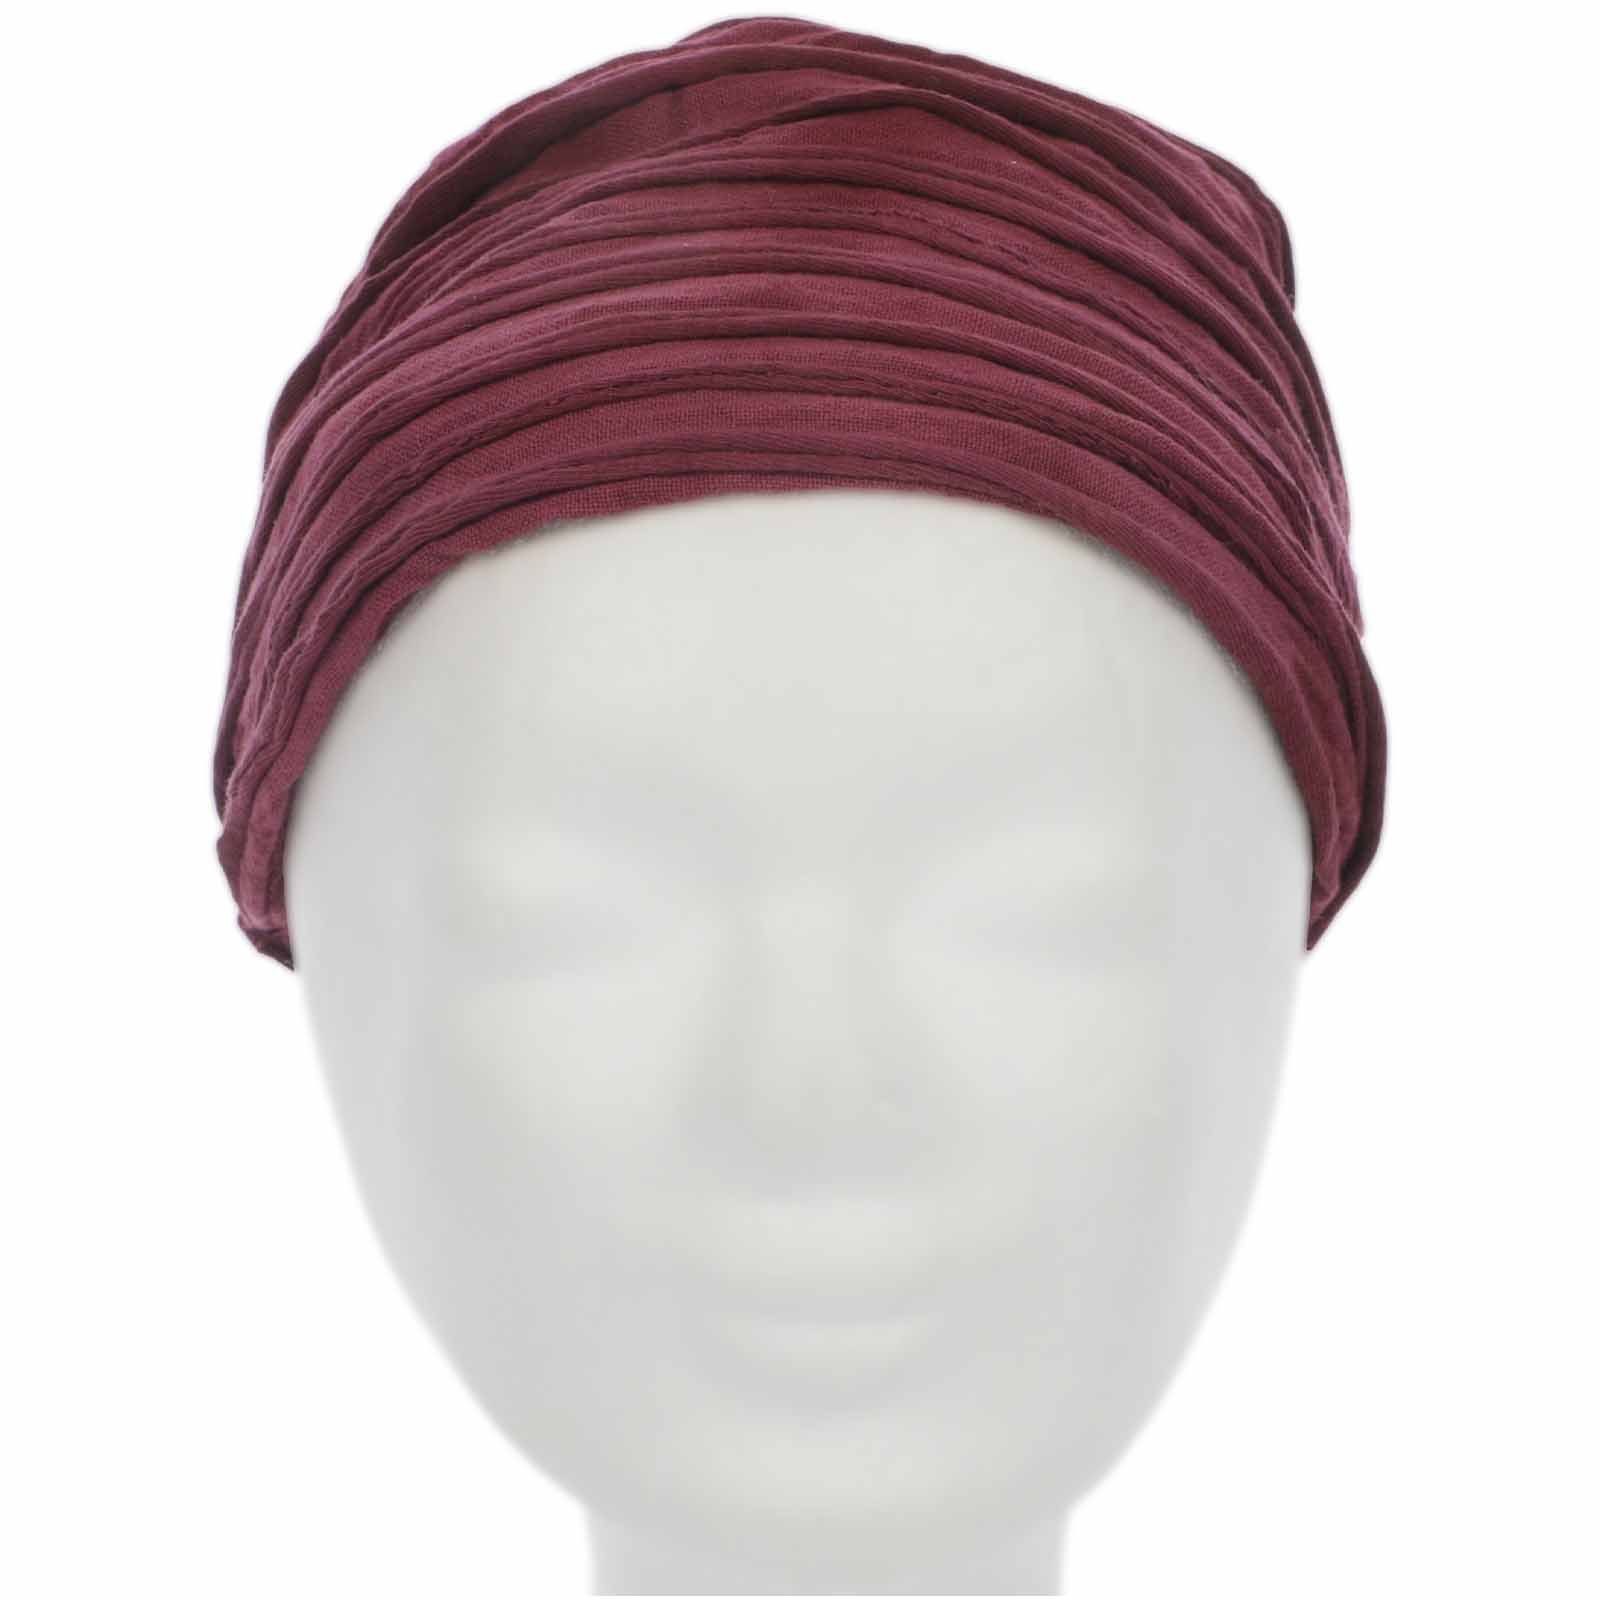 Bordeaux Batik Kopfband Stirnband MAGIE Stirnband unisex UND hippie Yoga KUNST KUNST&MAGIE Stonewashed